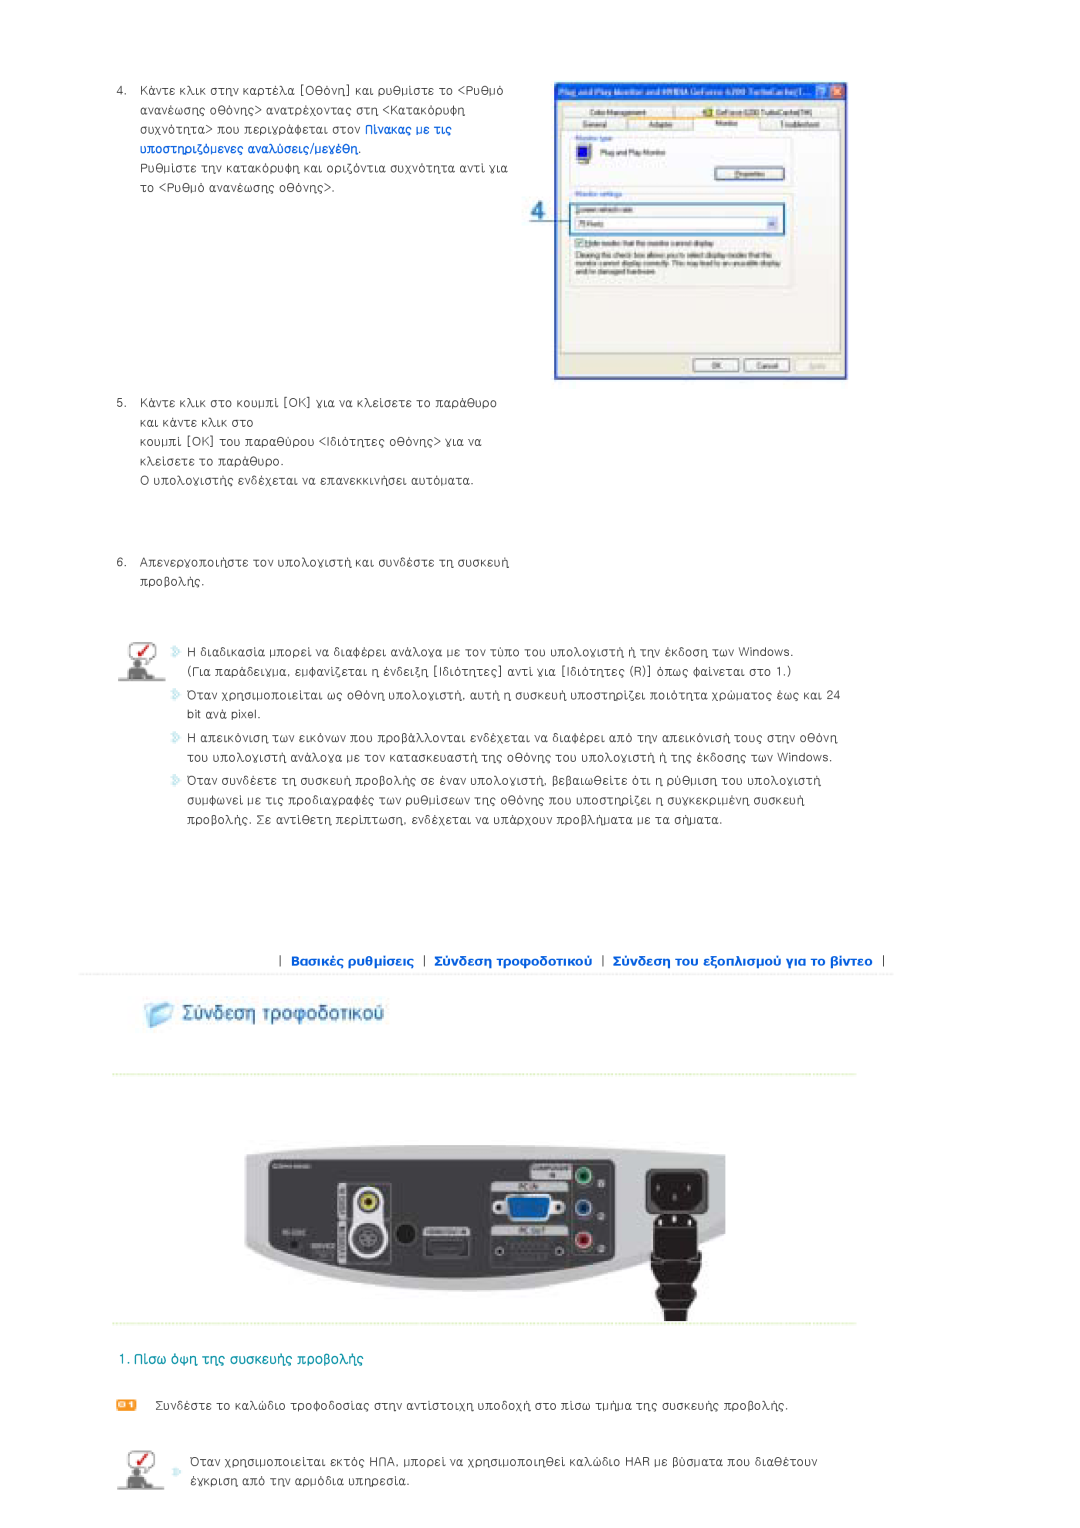 Samsung SPD400SFX/EN, SPD400SX/EN manual 1. Πίσω όψη της συσκευής προβολής 